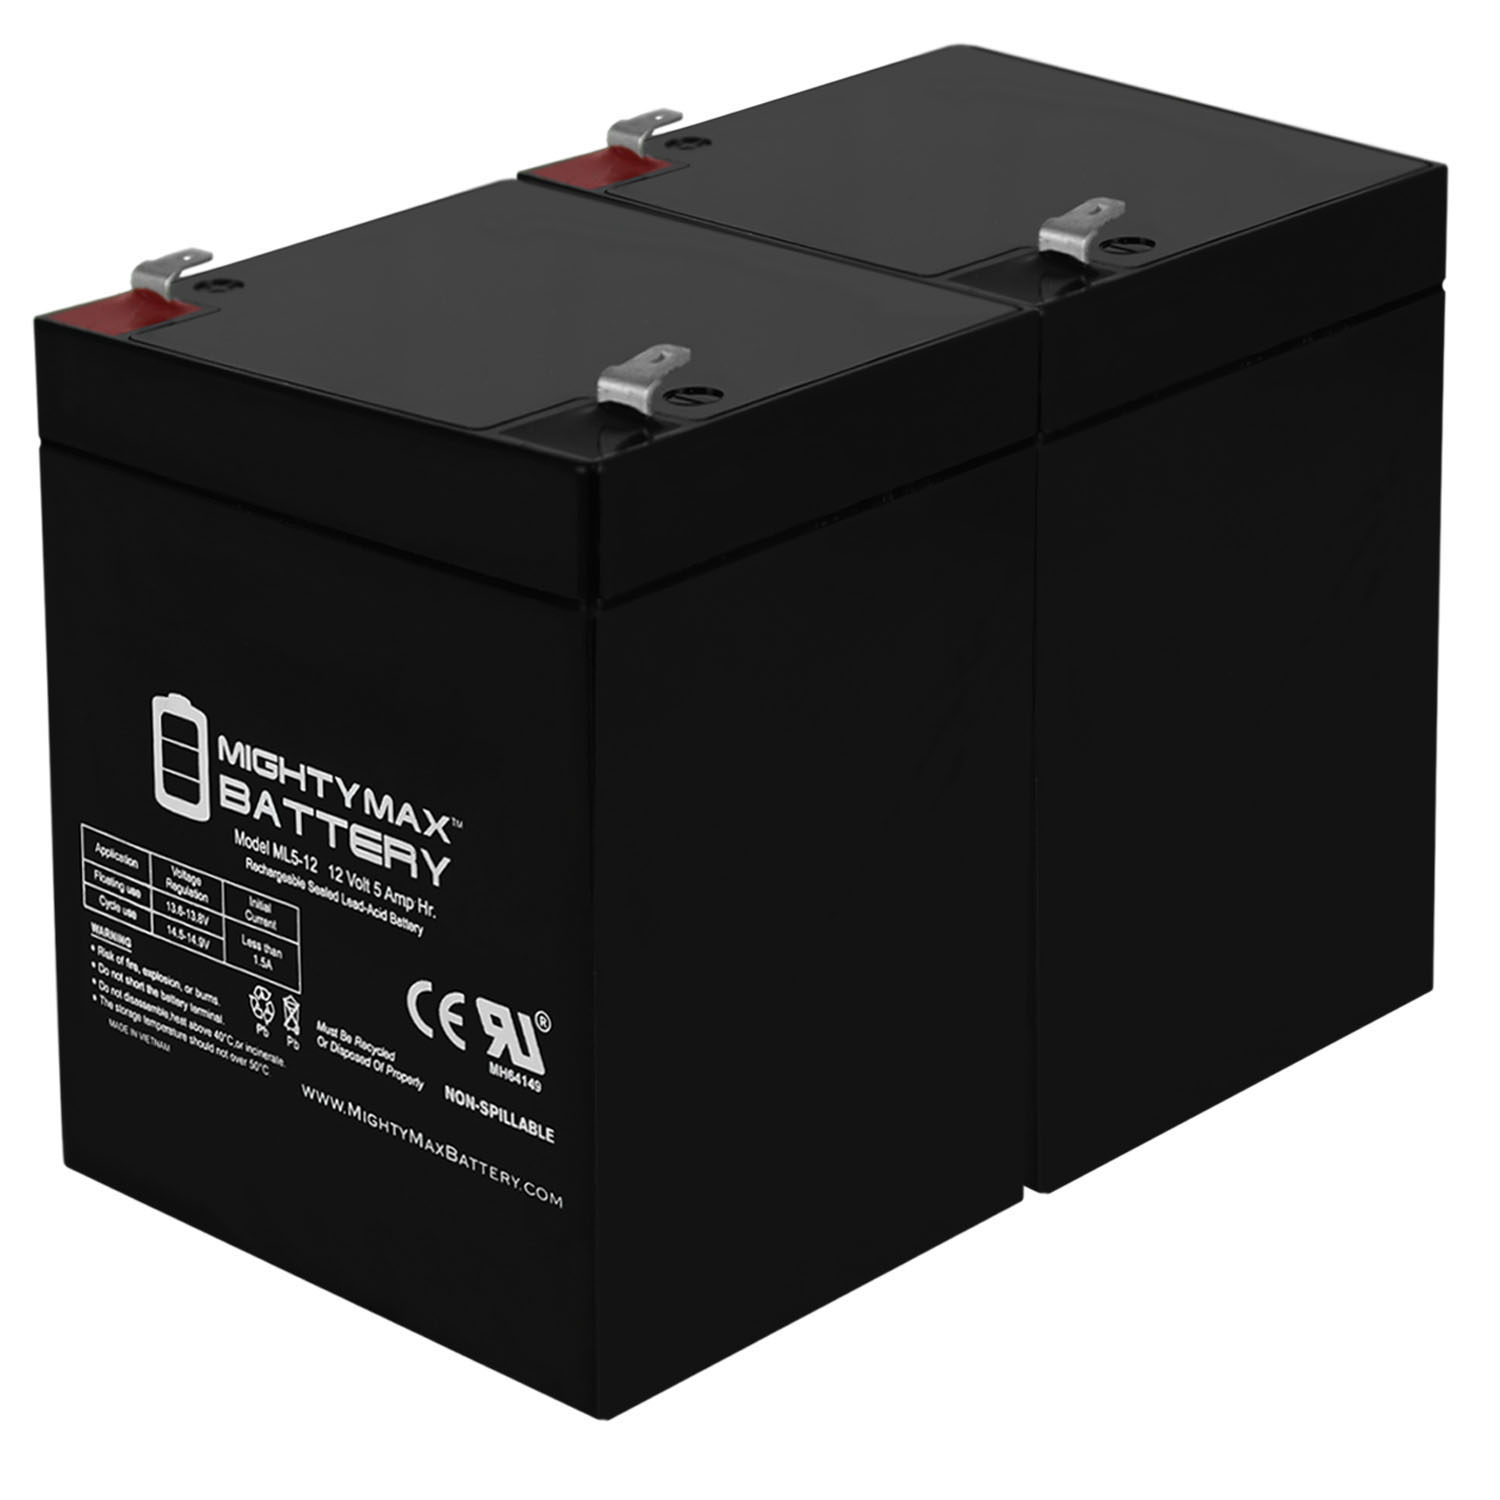 12V 5AH SLA Replacement Battery for Shampaine 4900 - 2 Pack